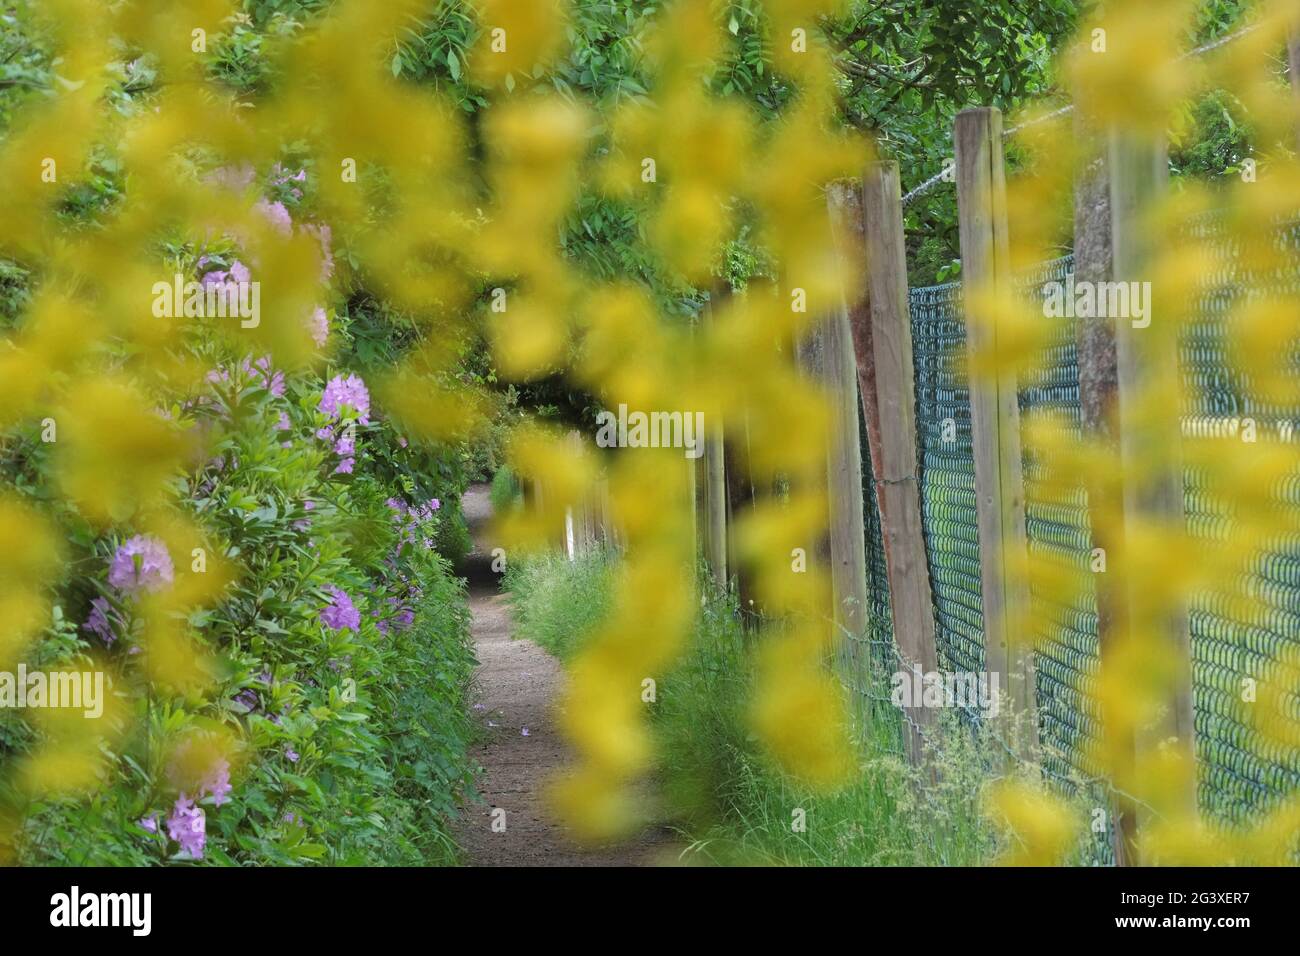 Laburnum curtain: Spring walk through a curtain of yellow laburnum flowers. Bedfordshire, England. Stock Photo